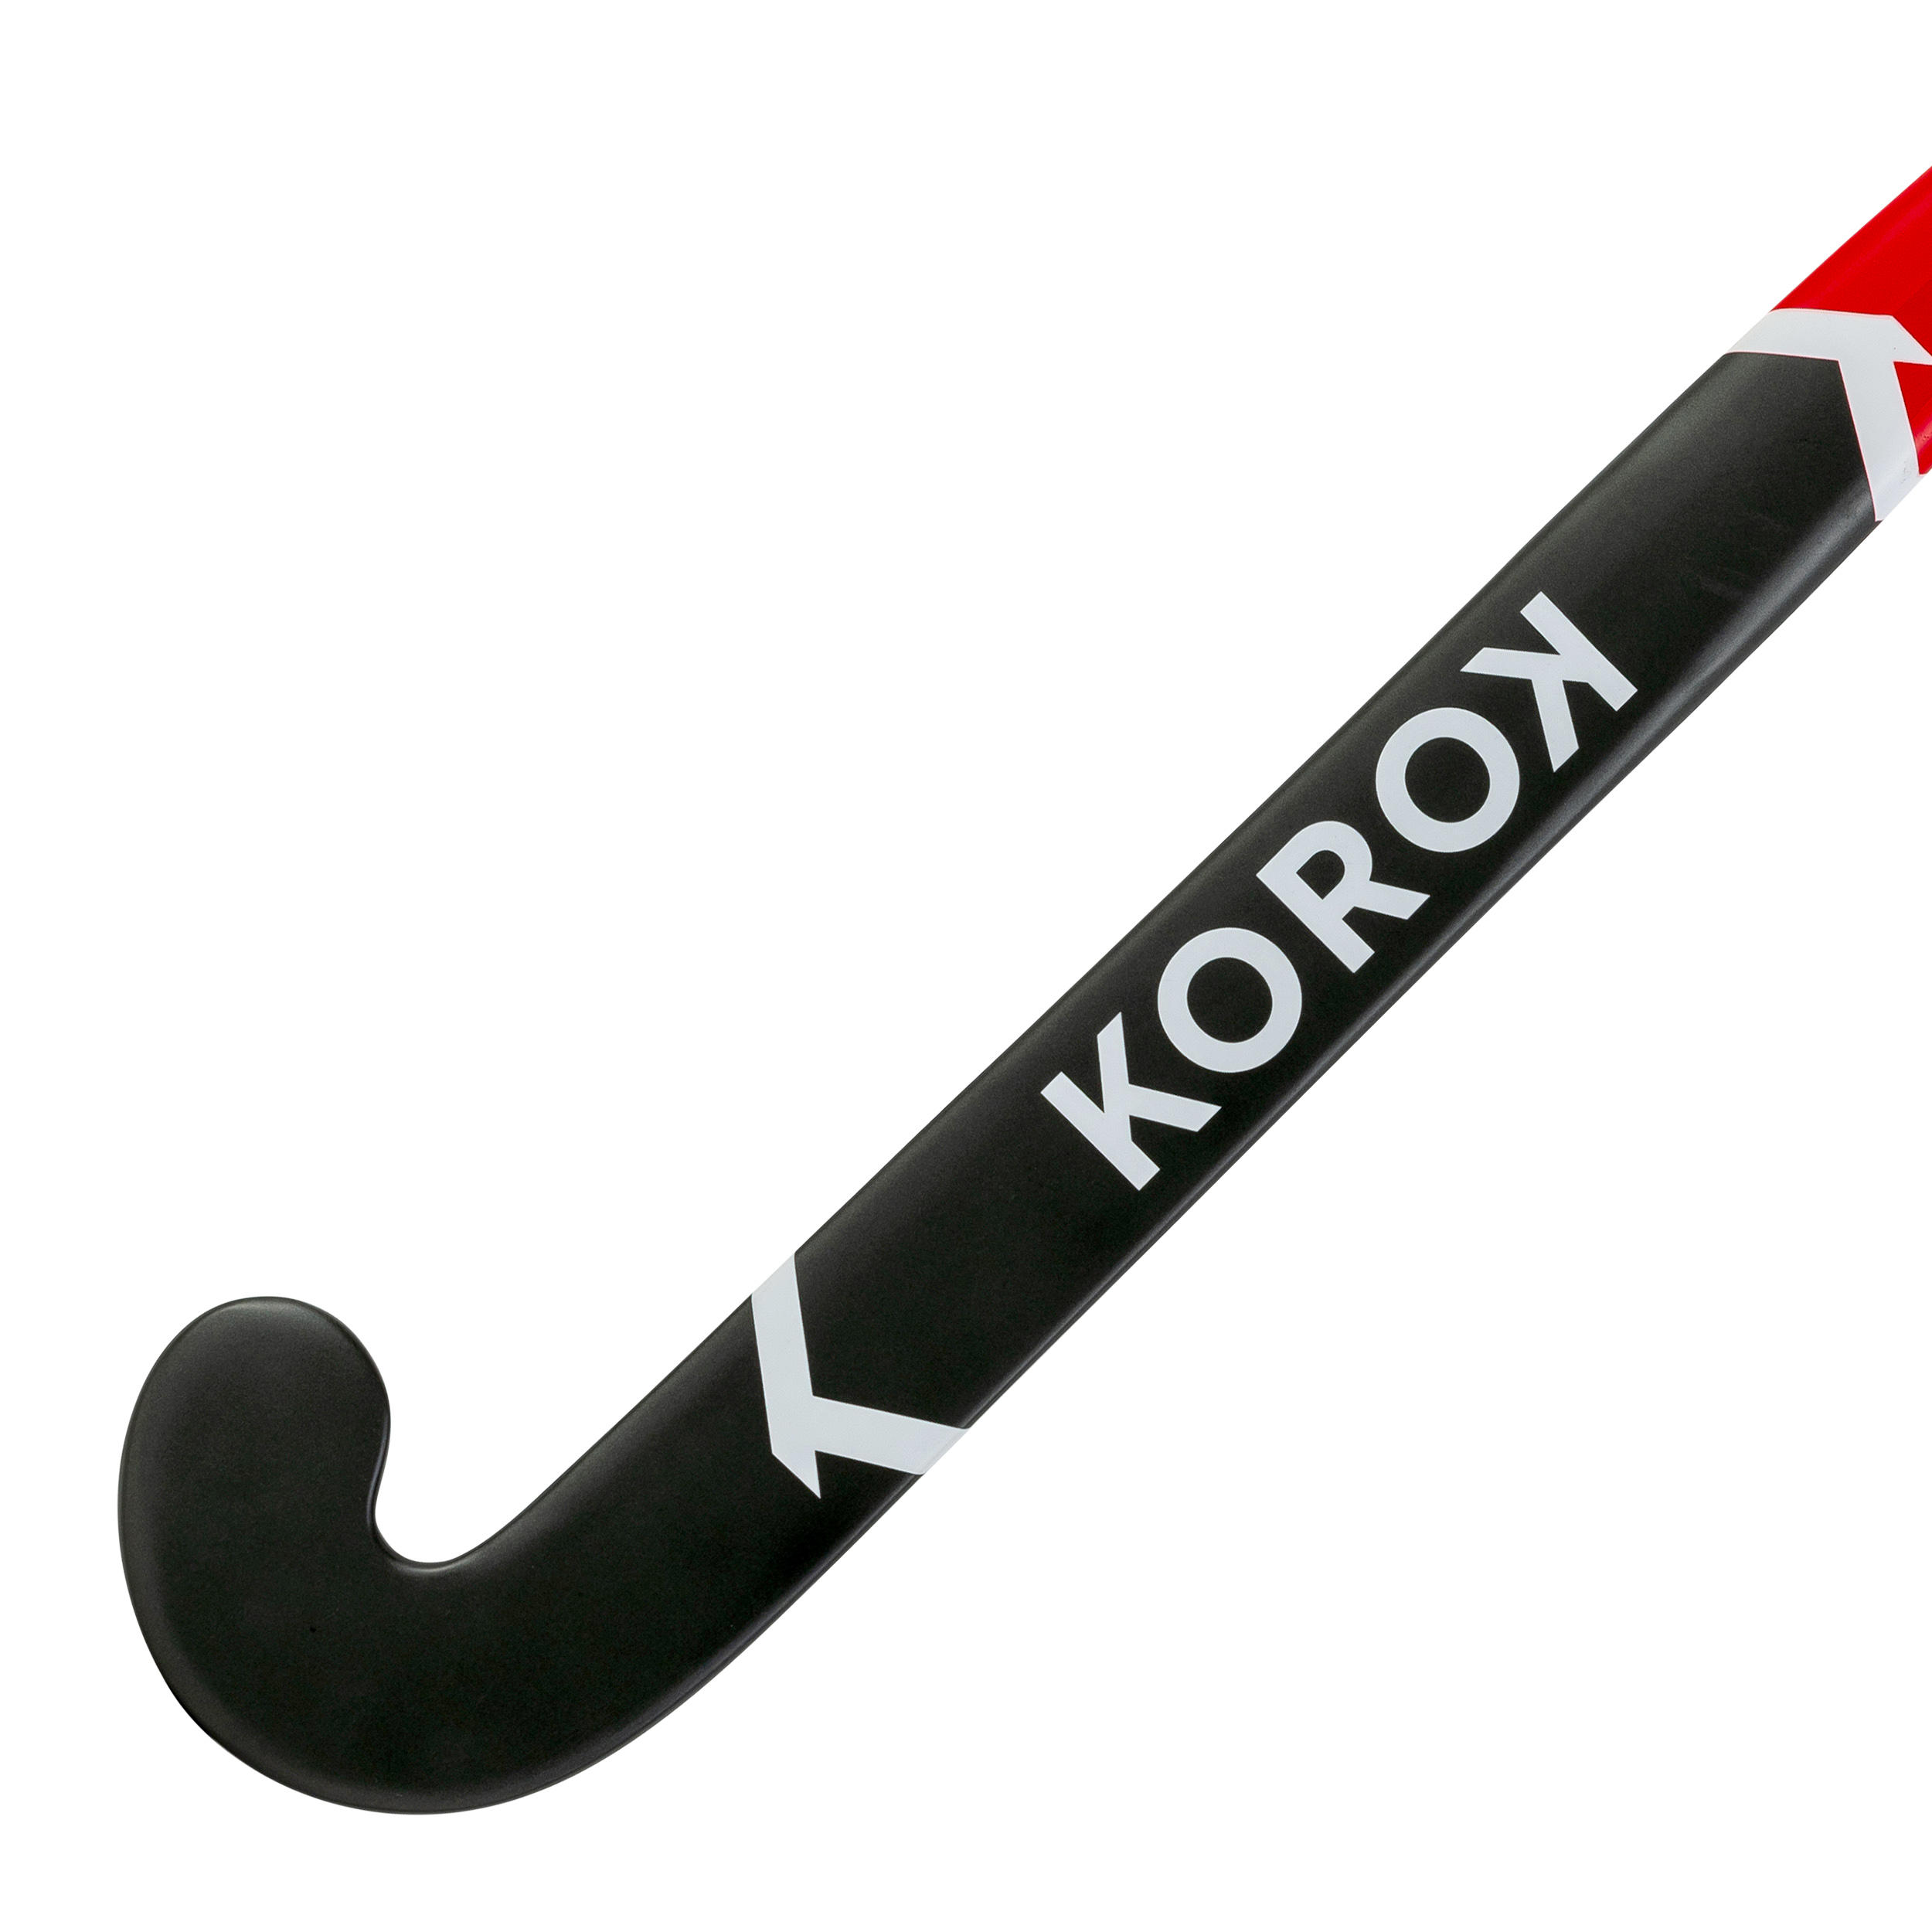 Adult Beginner Standard Bow Fibreglass Field Hockey Stick FH150 - Red 12/12